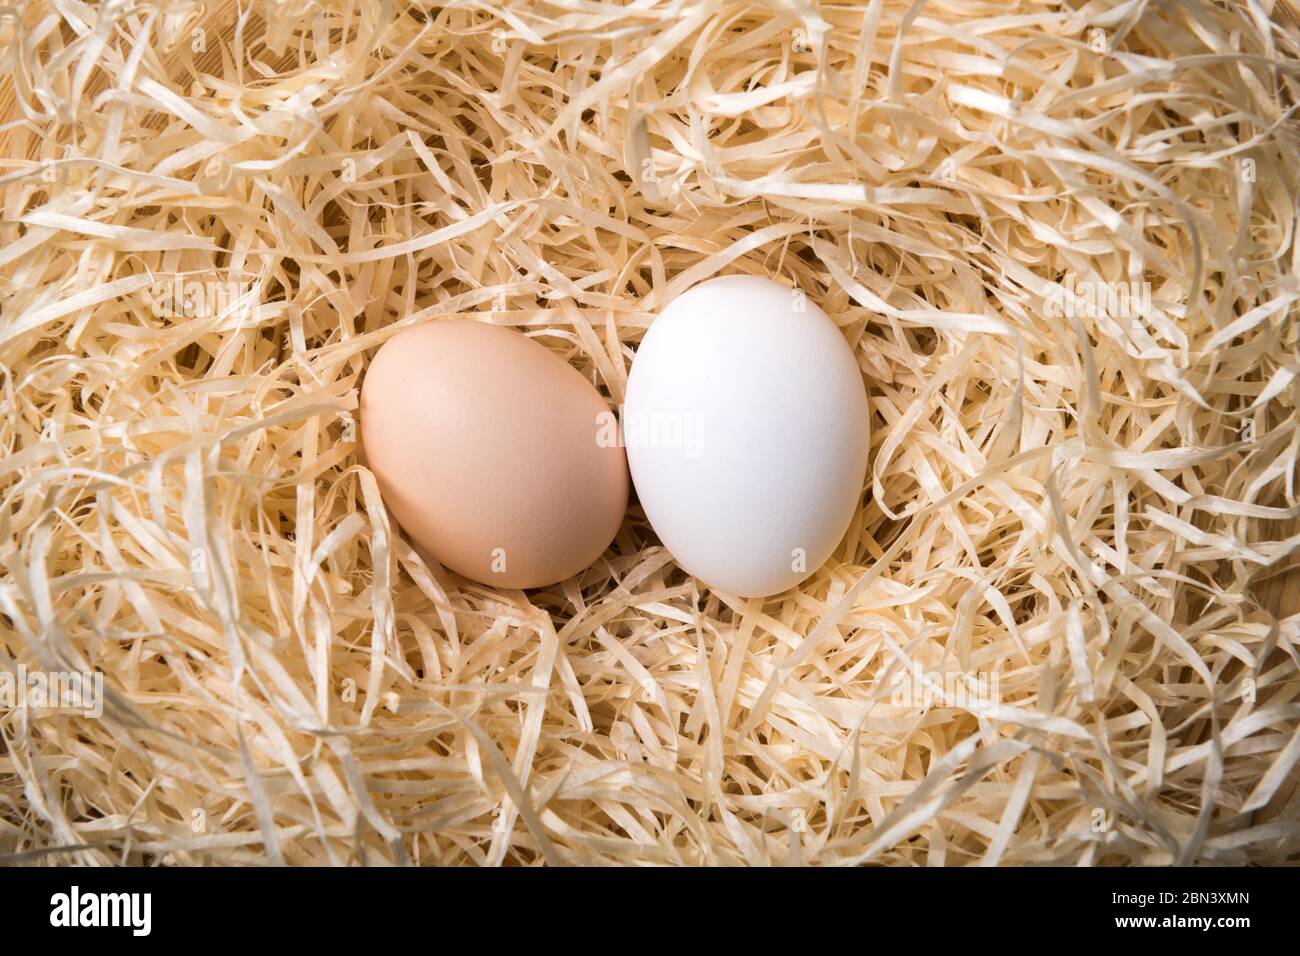 Huevos de pollo orgánicos en nido de primer plano. Fotografía de alimentos Foto de stock